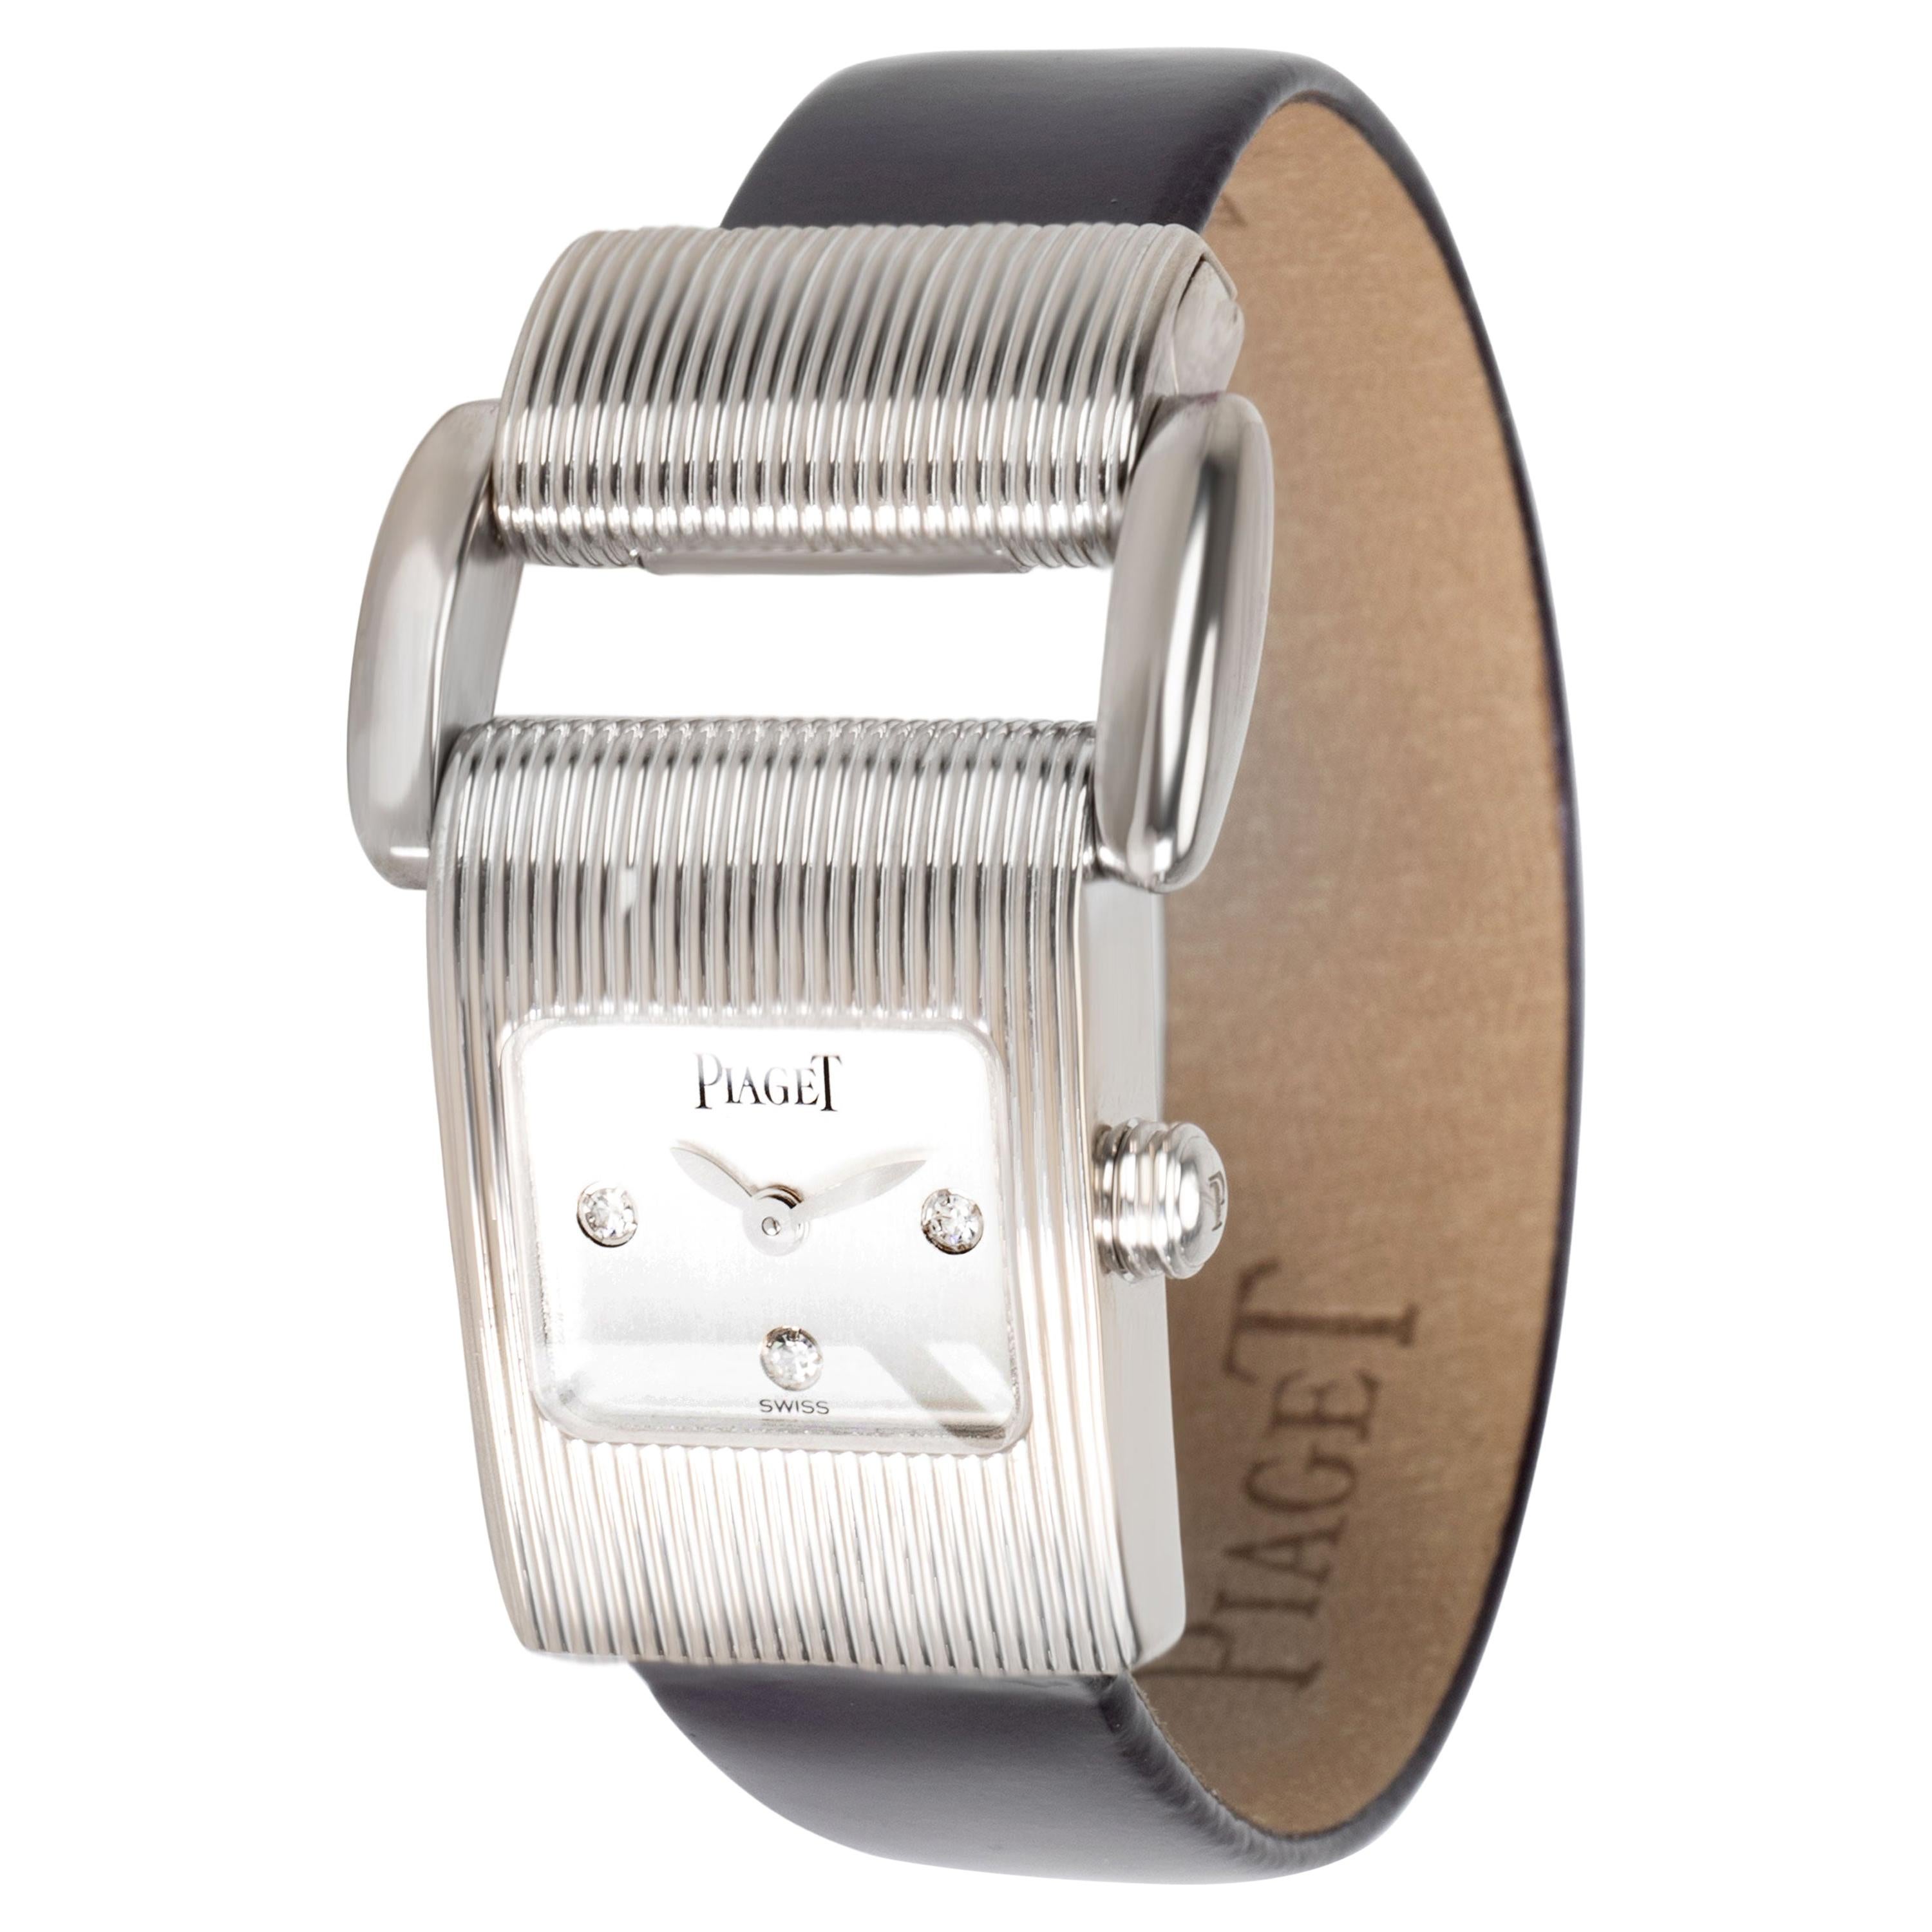 Piaget 18 Karat 750 Solid Gold Diamond Watch Tan Colored Dial Miss ...